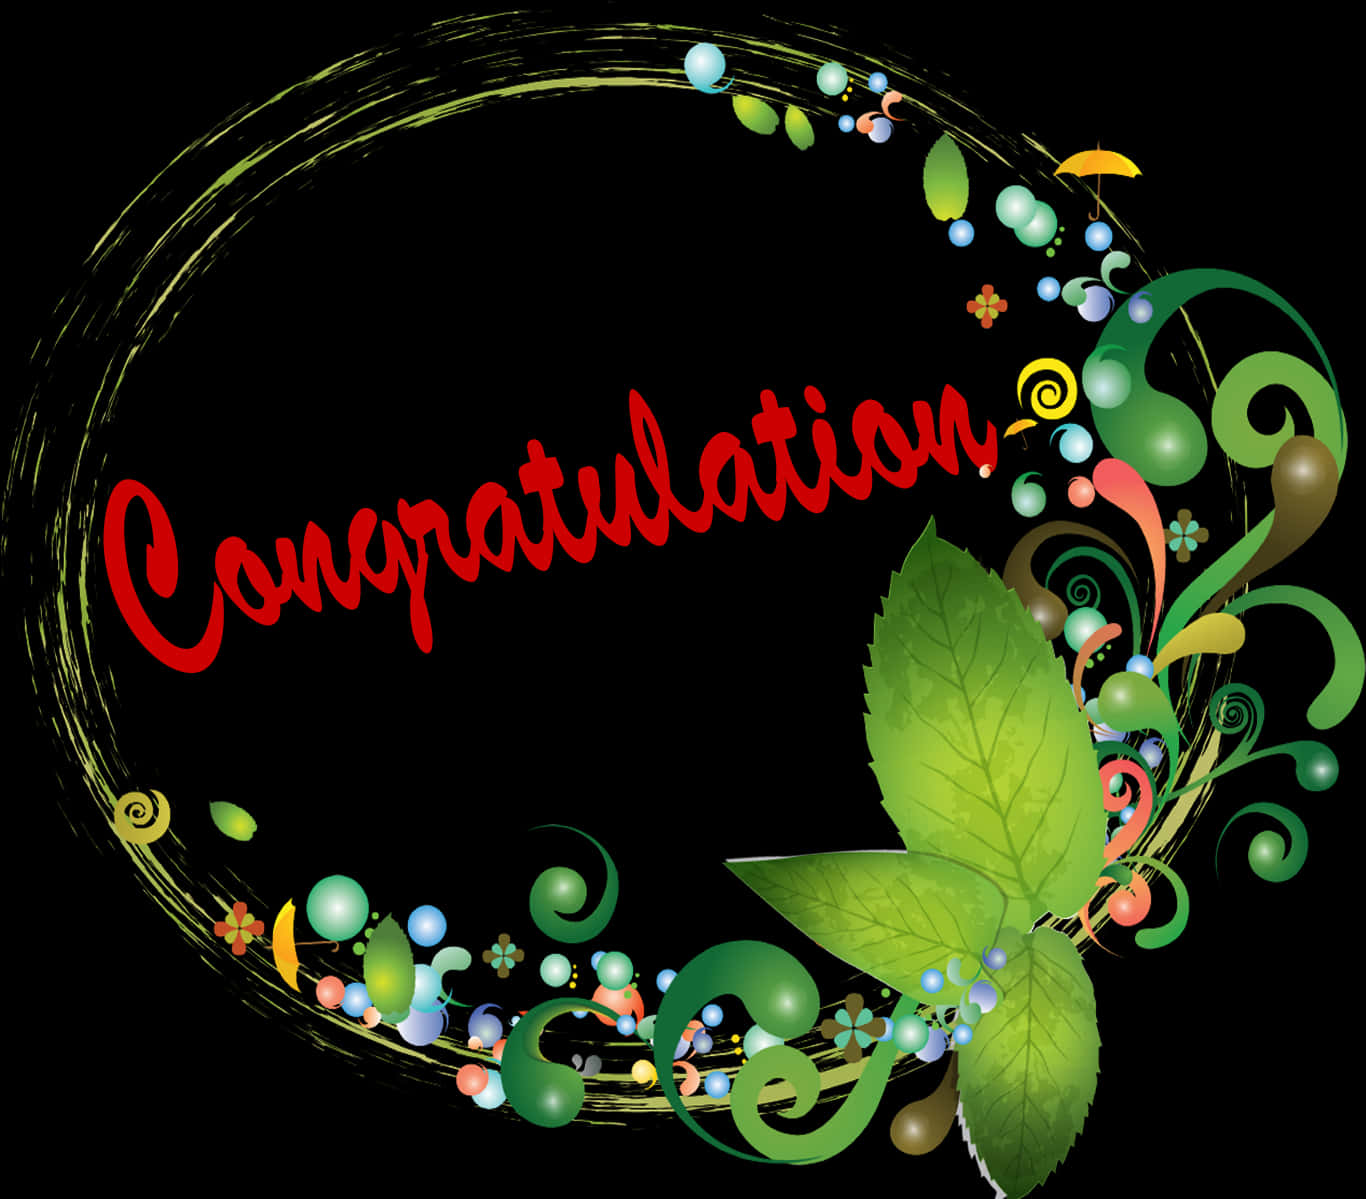 Congratulazionipng - Congratulazioni Png